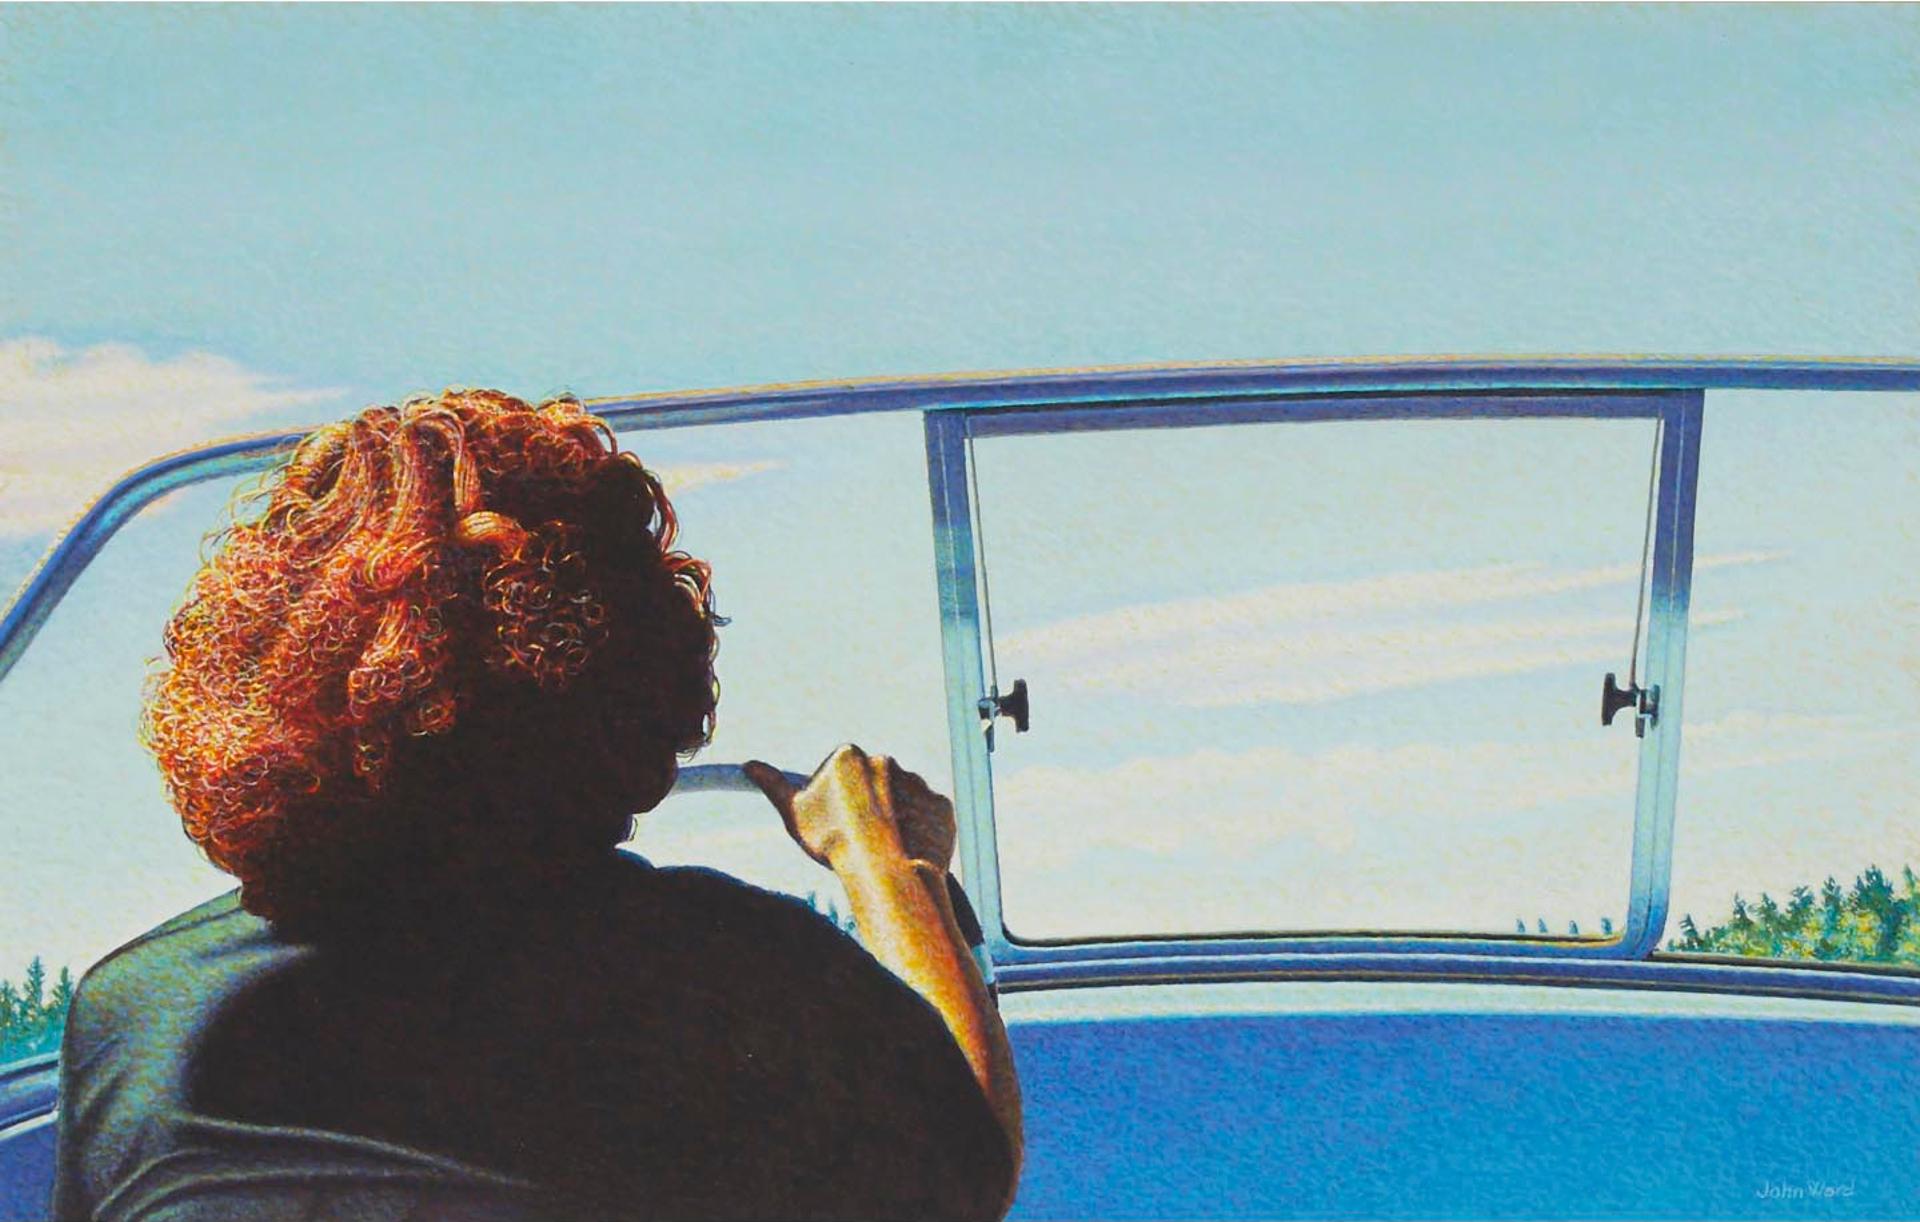 John Ward (1948) - Boat Rider, 1977